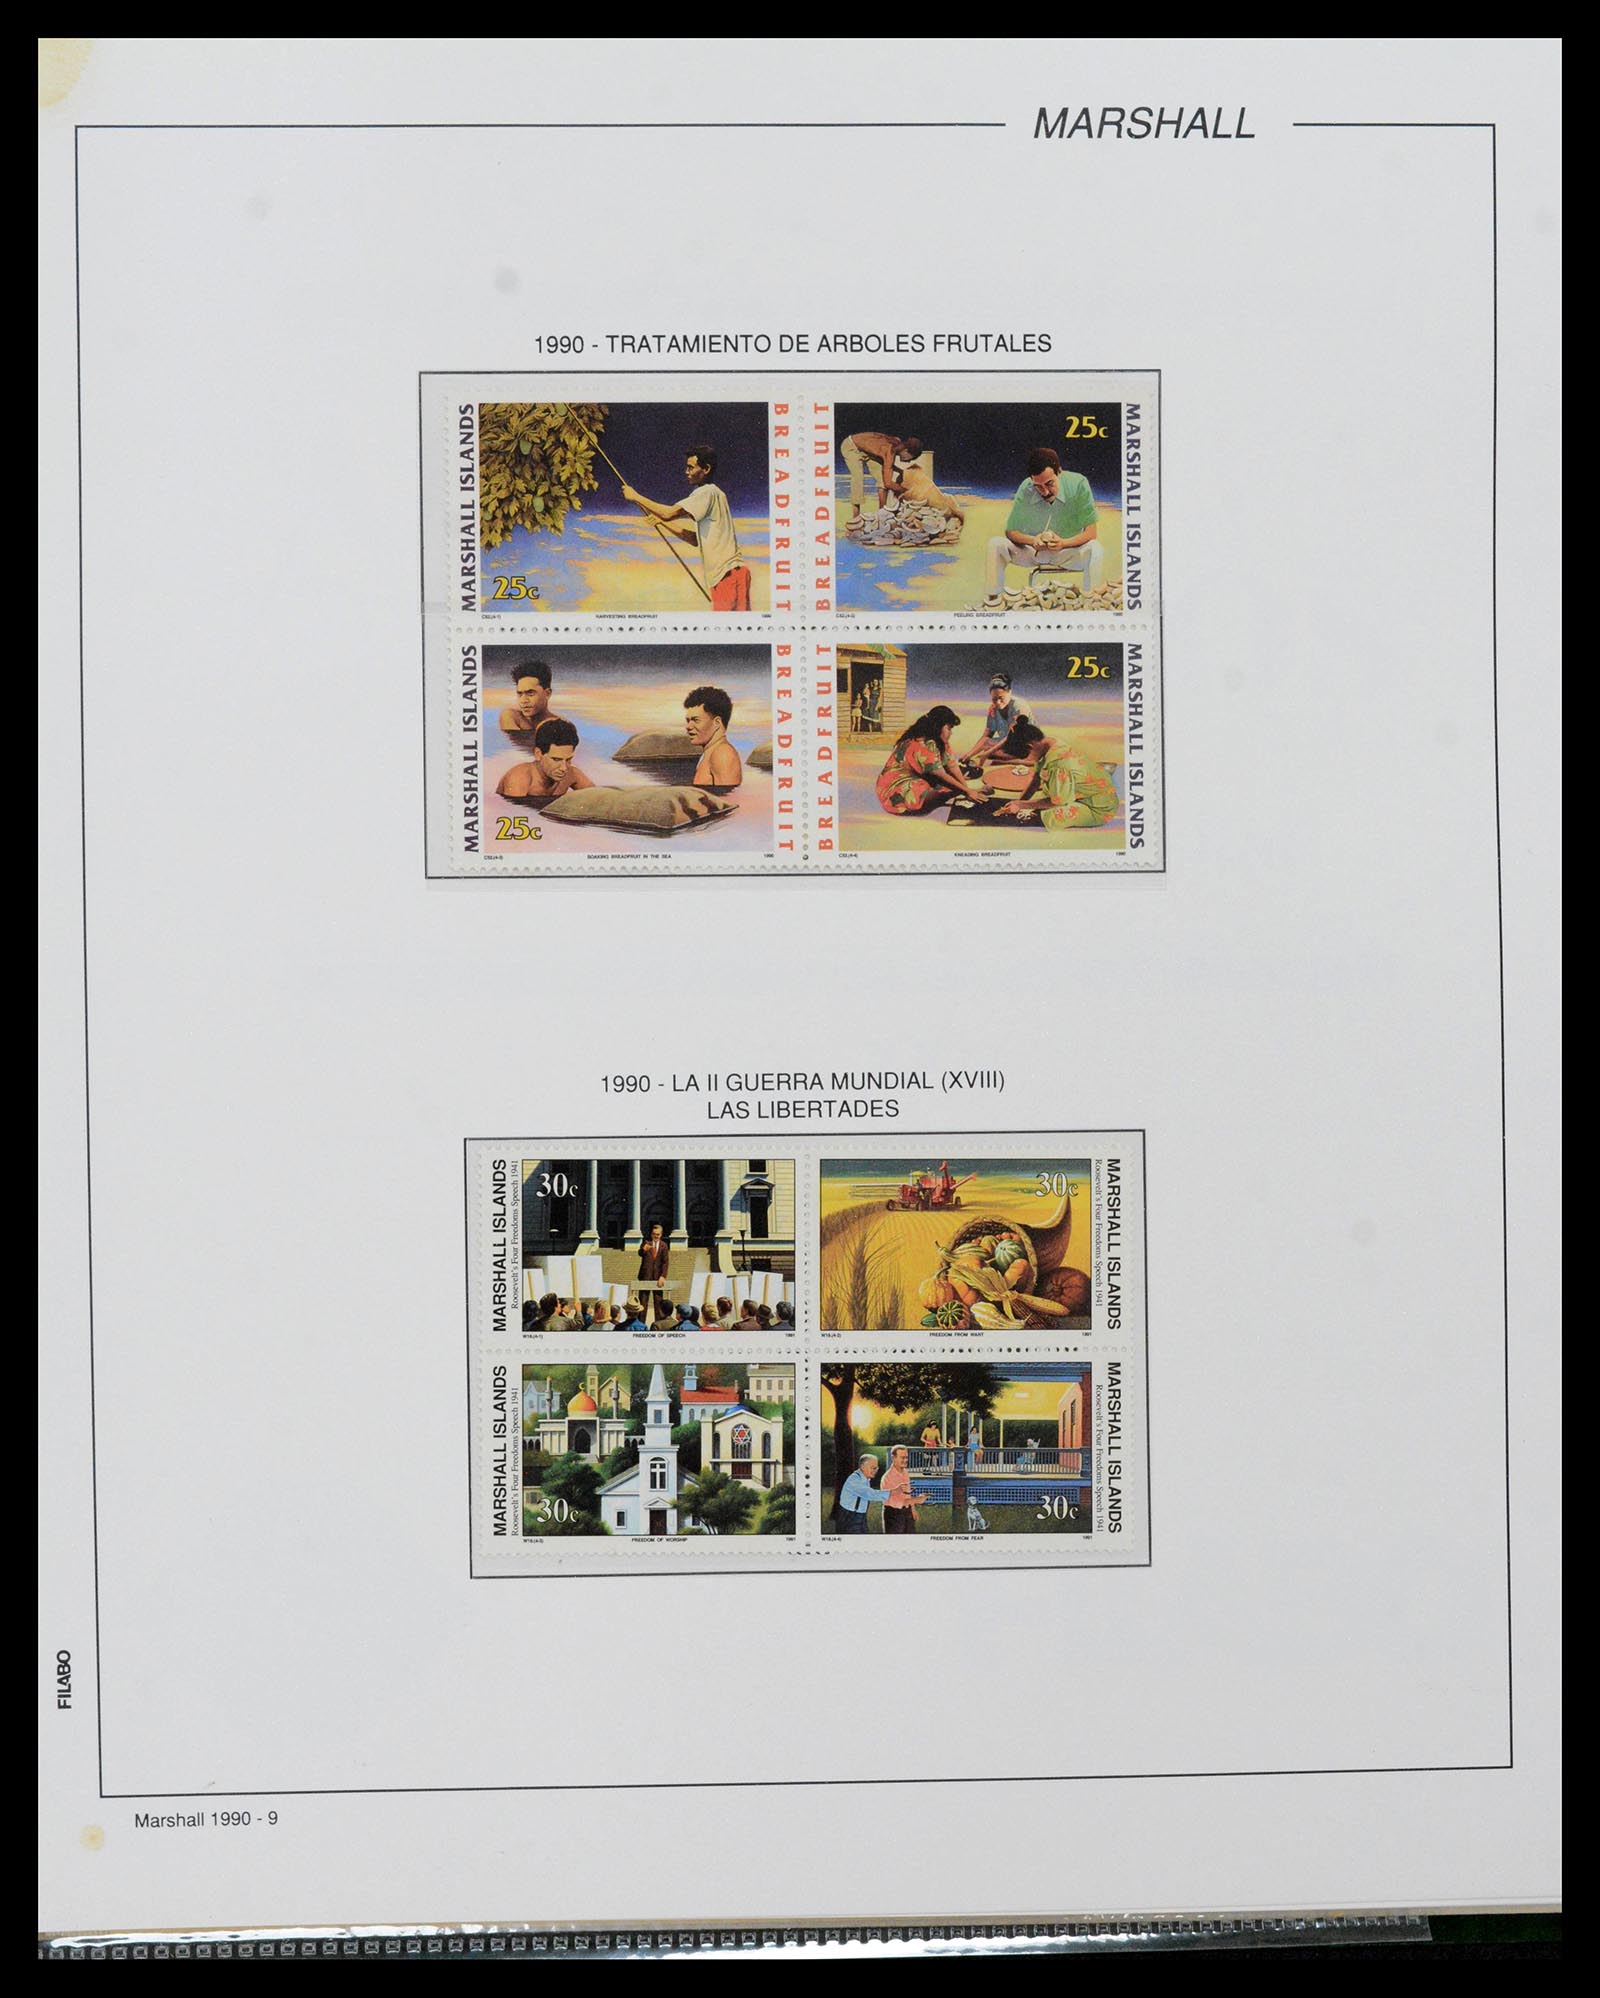 39222 0151 - Stamp collection 39222 Palau, Micronesia and Marshall islands 1980-1995.